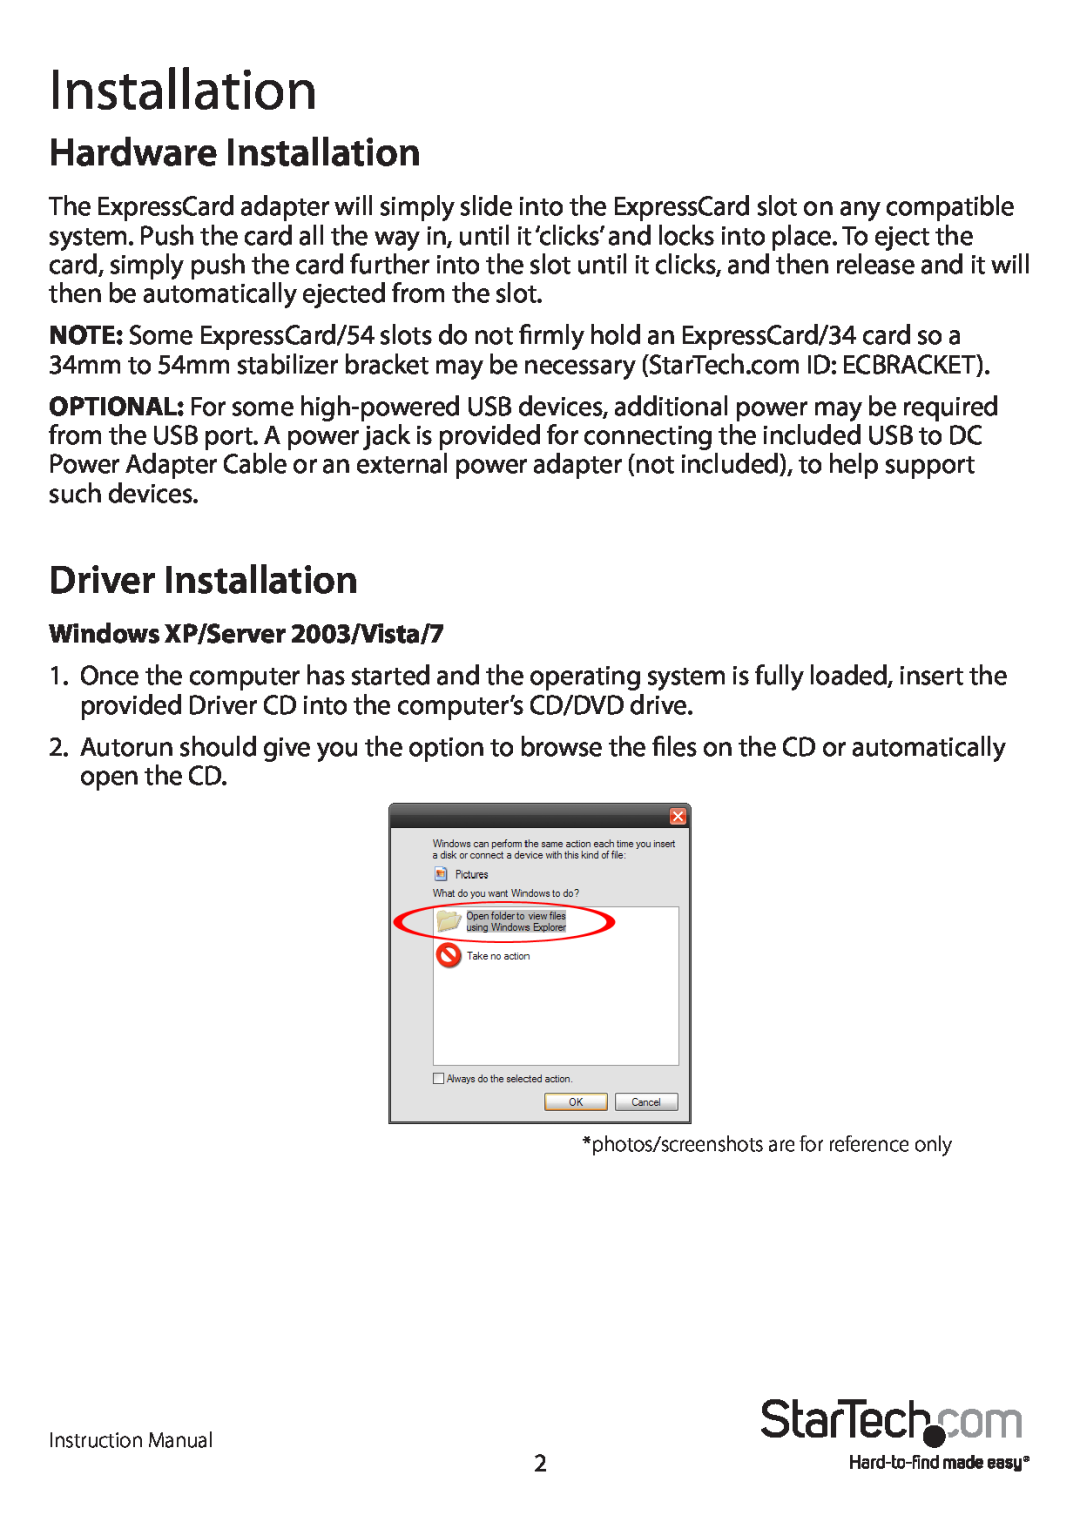 StarTech.com ecusb3s22 manual Hardware Installation, Driver Installation, Windows XP/Server 2003/Vista/7 